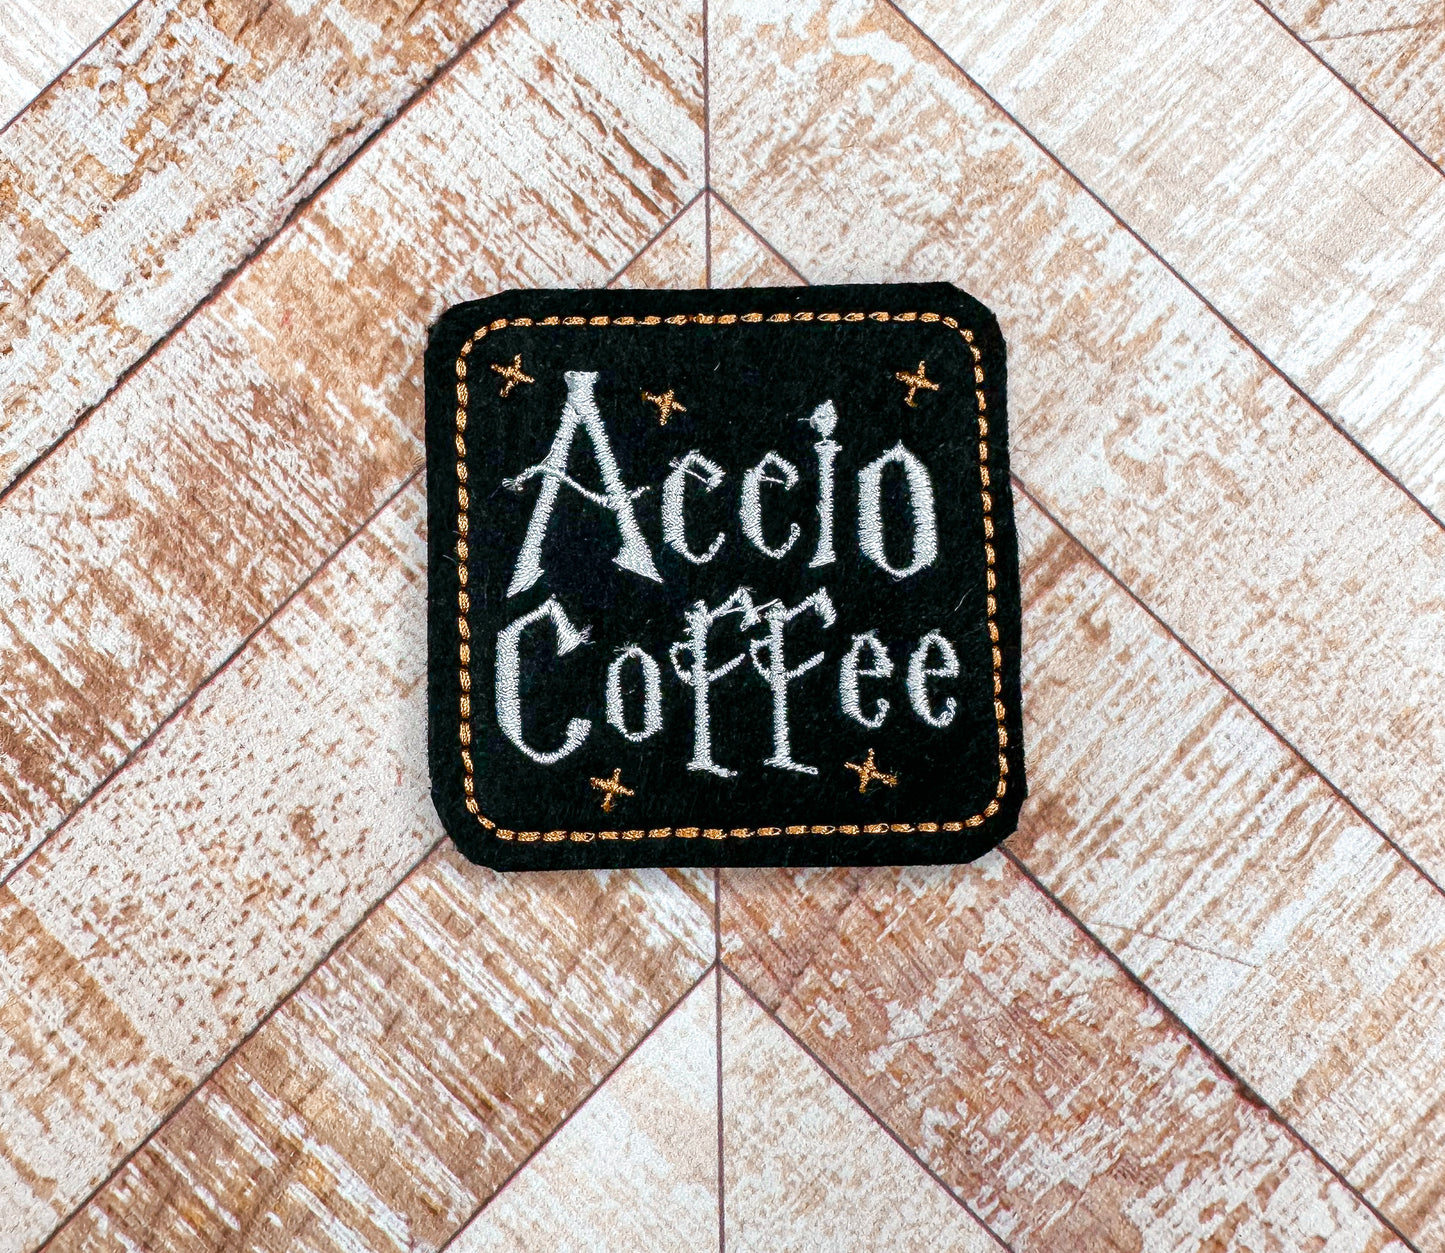 Accio Coffee Feltie